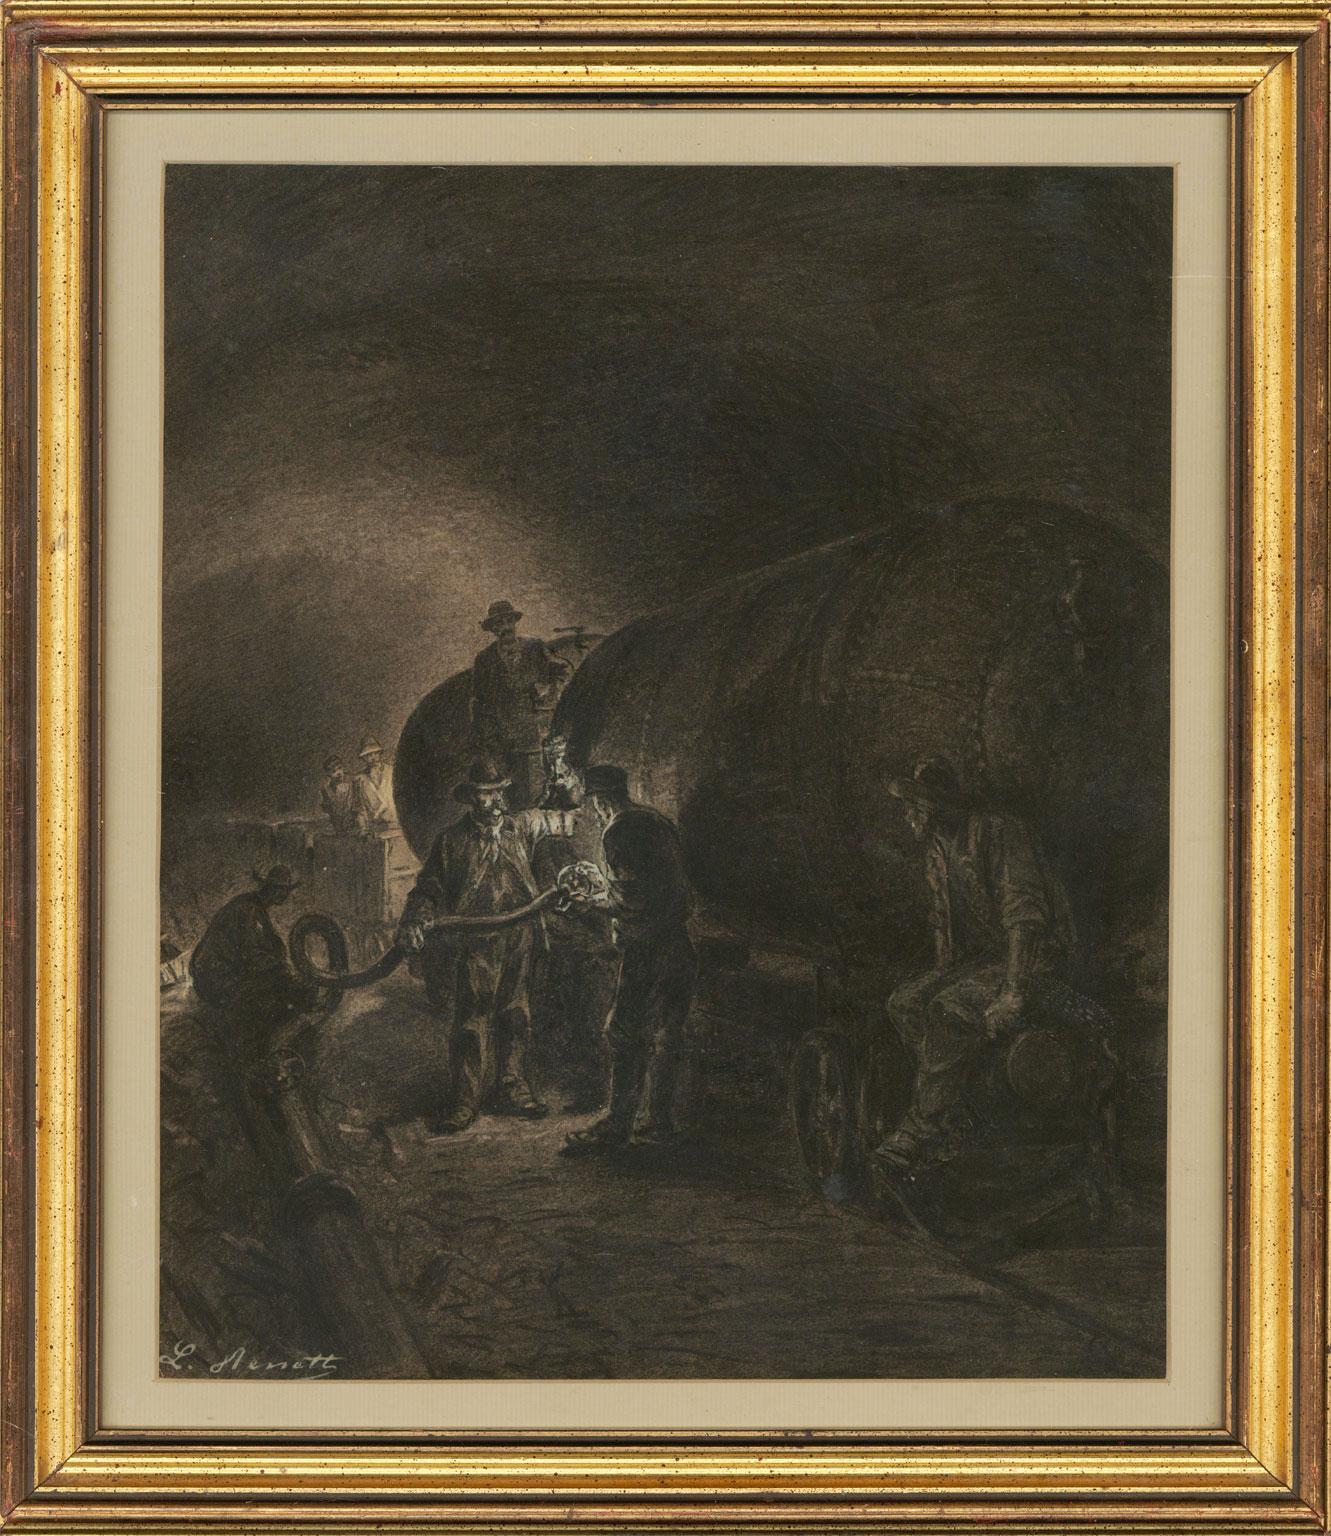 LÃ©on Benett Figurative Art - LÃCon Benett (1839-1917) - Very Fine Charcoal Drawing, The Railway Tanker